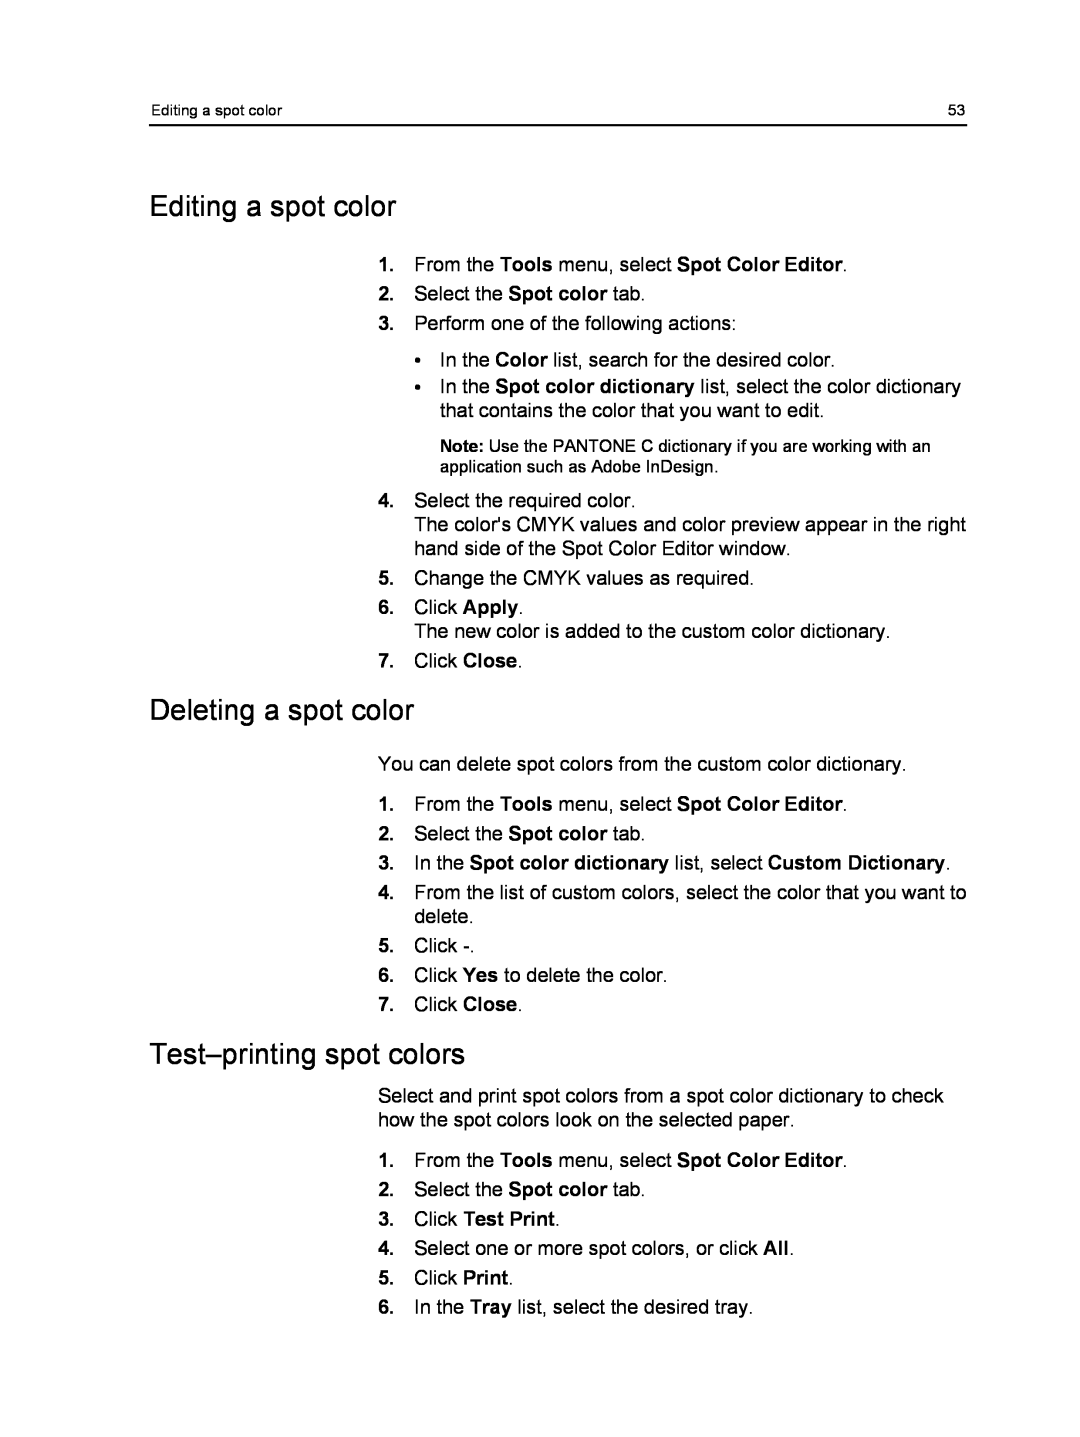 Xerox 550, 560 manual Editing a spot color, Deleting a spot color, Test–printingspot colors, Click Test Print 